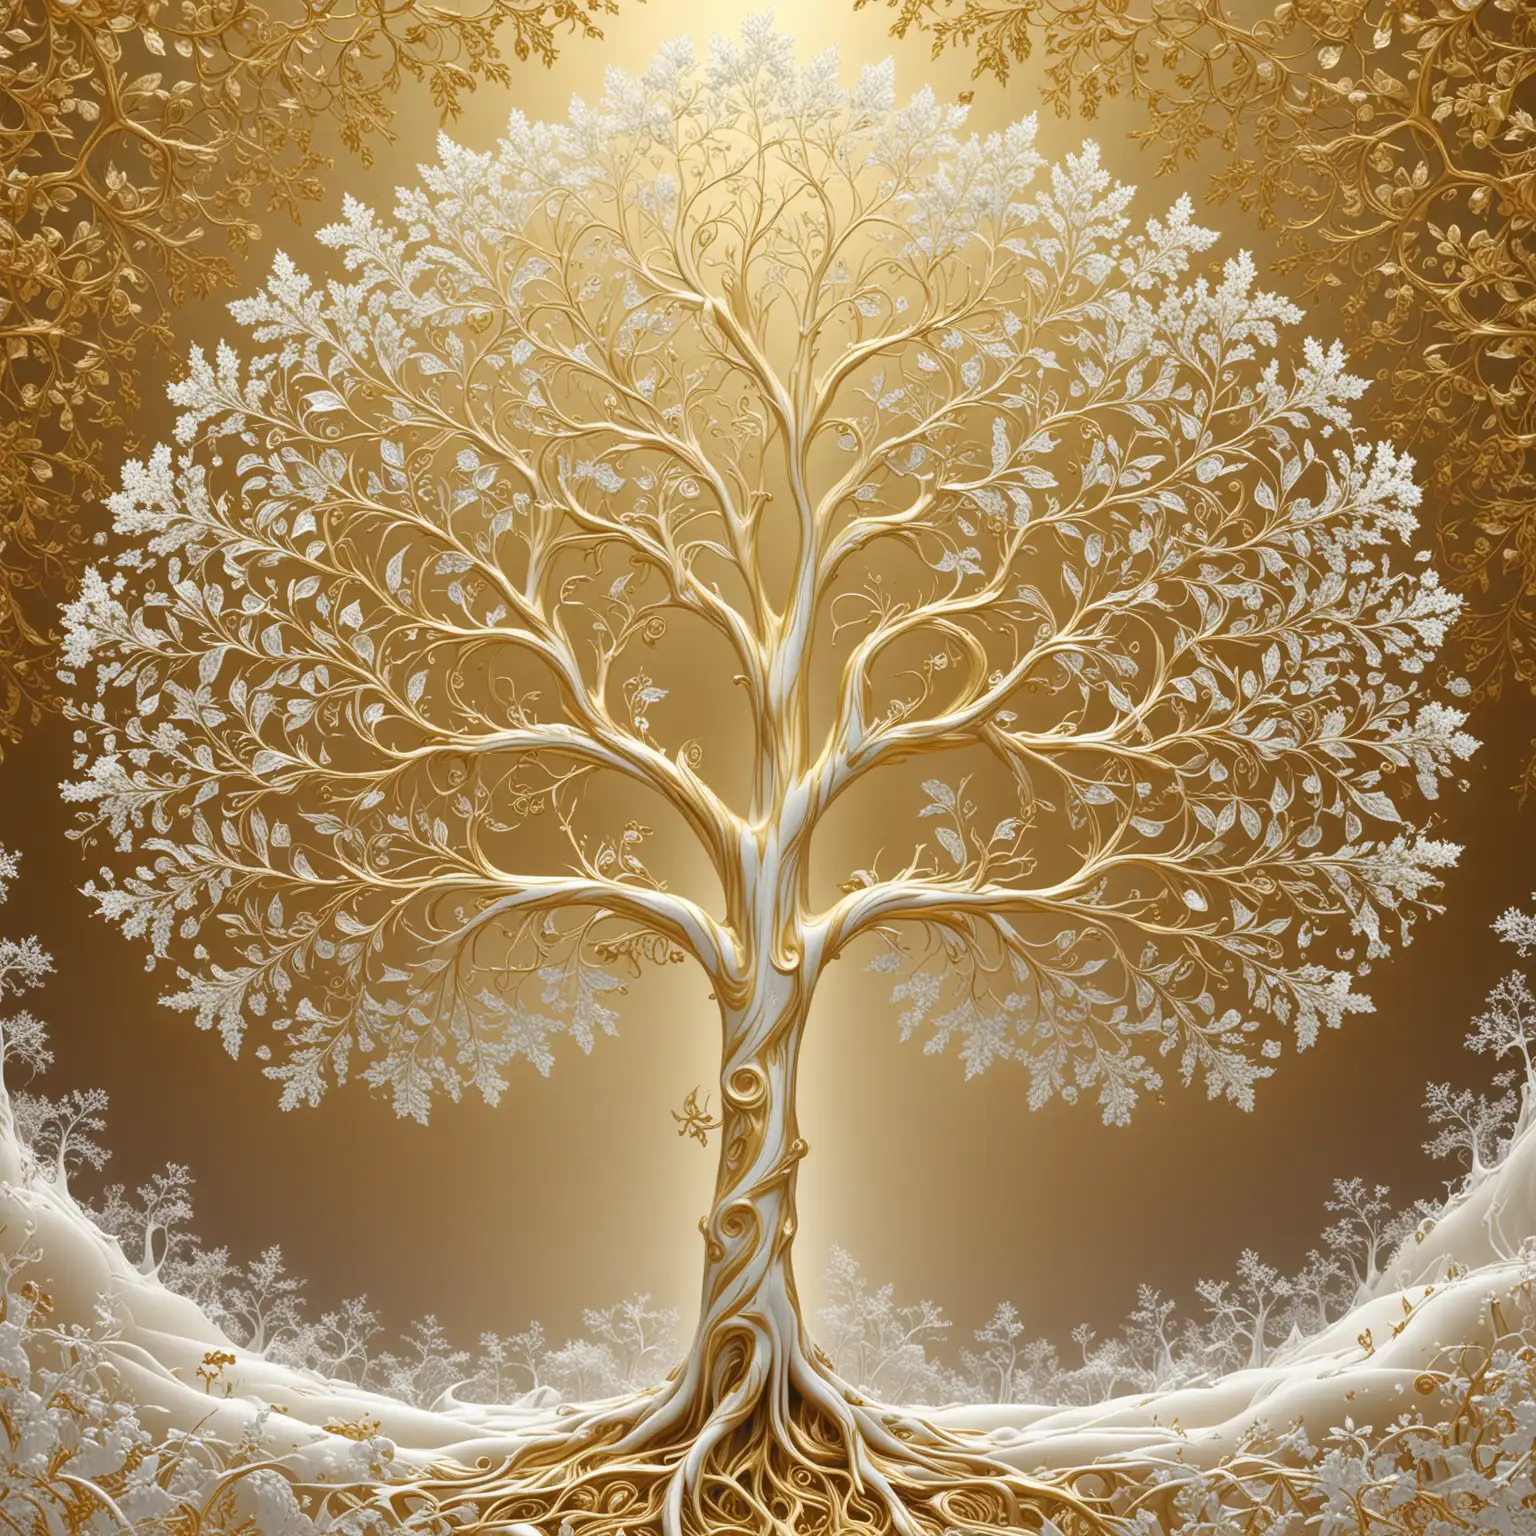 Golden Fractal Tree Art Stunning Lyopanov Style in Gold and White